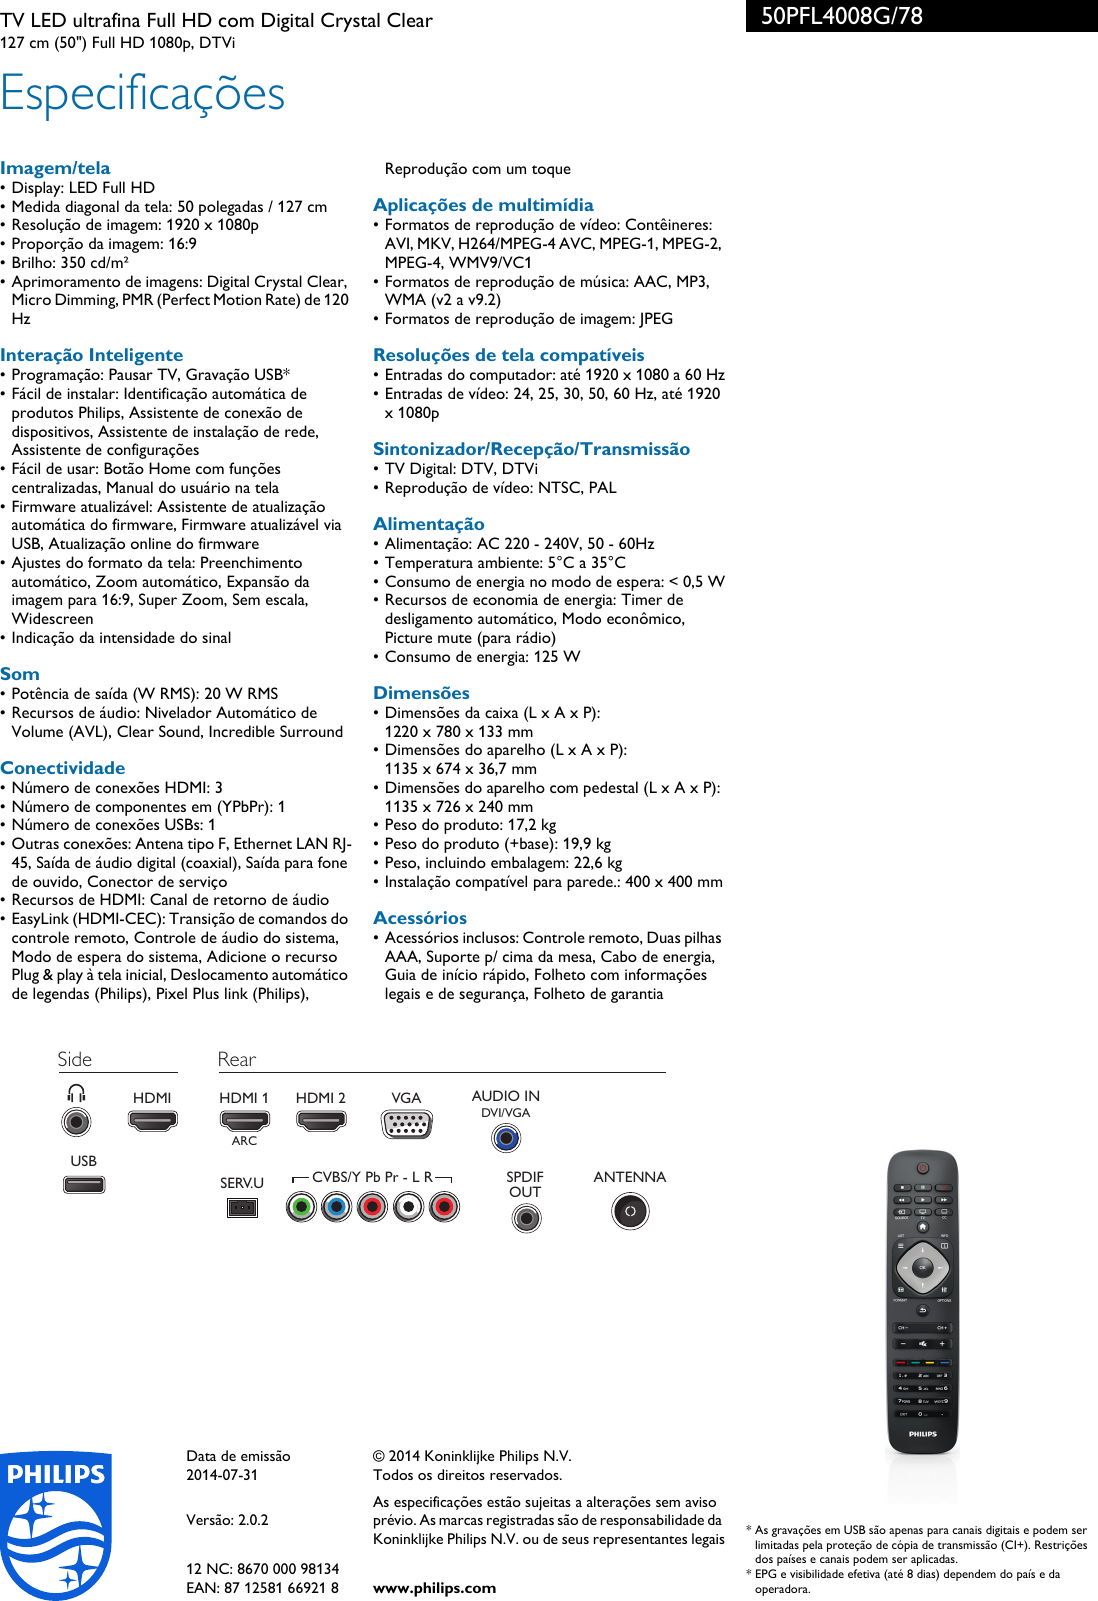 Page 3 of 3 - Philips 50PFL4008G/78 TV LED Ultrafina Full HD Com Digital Crystal Clear User Manual Folheto 50pfl4008g 78 Pss Brpbr